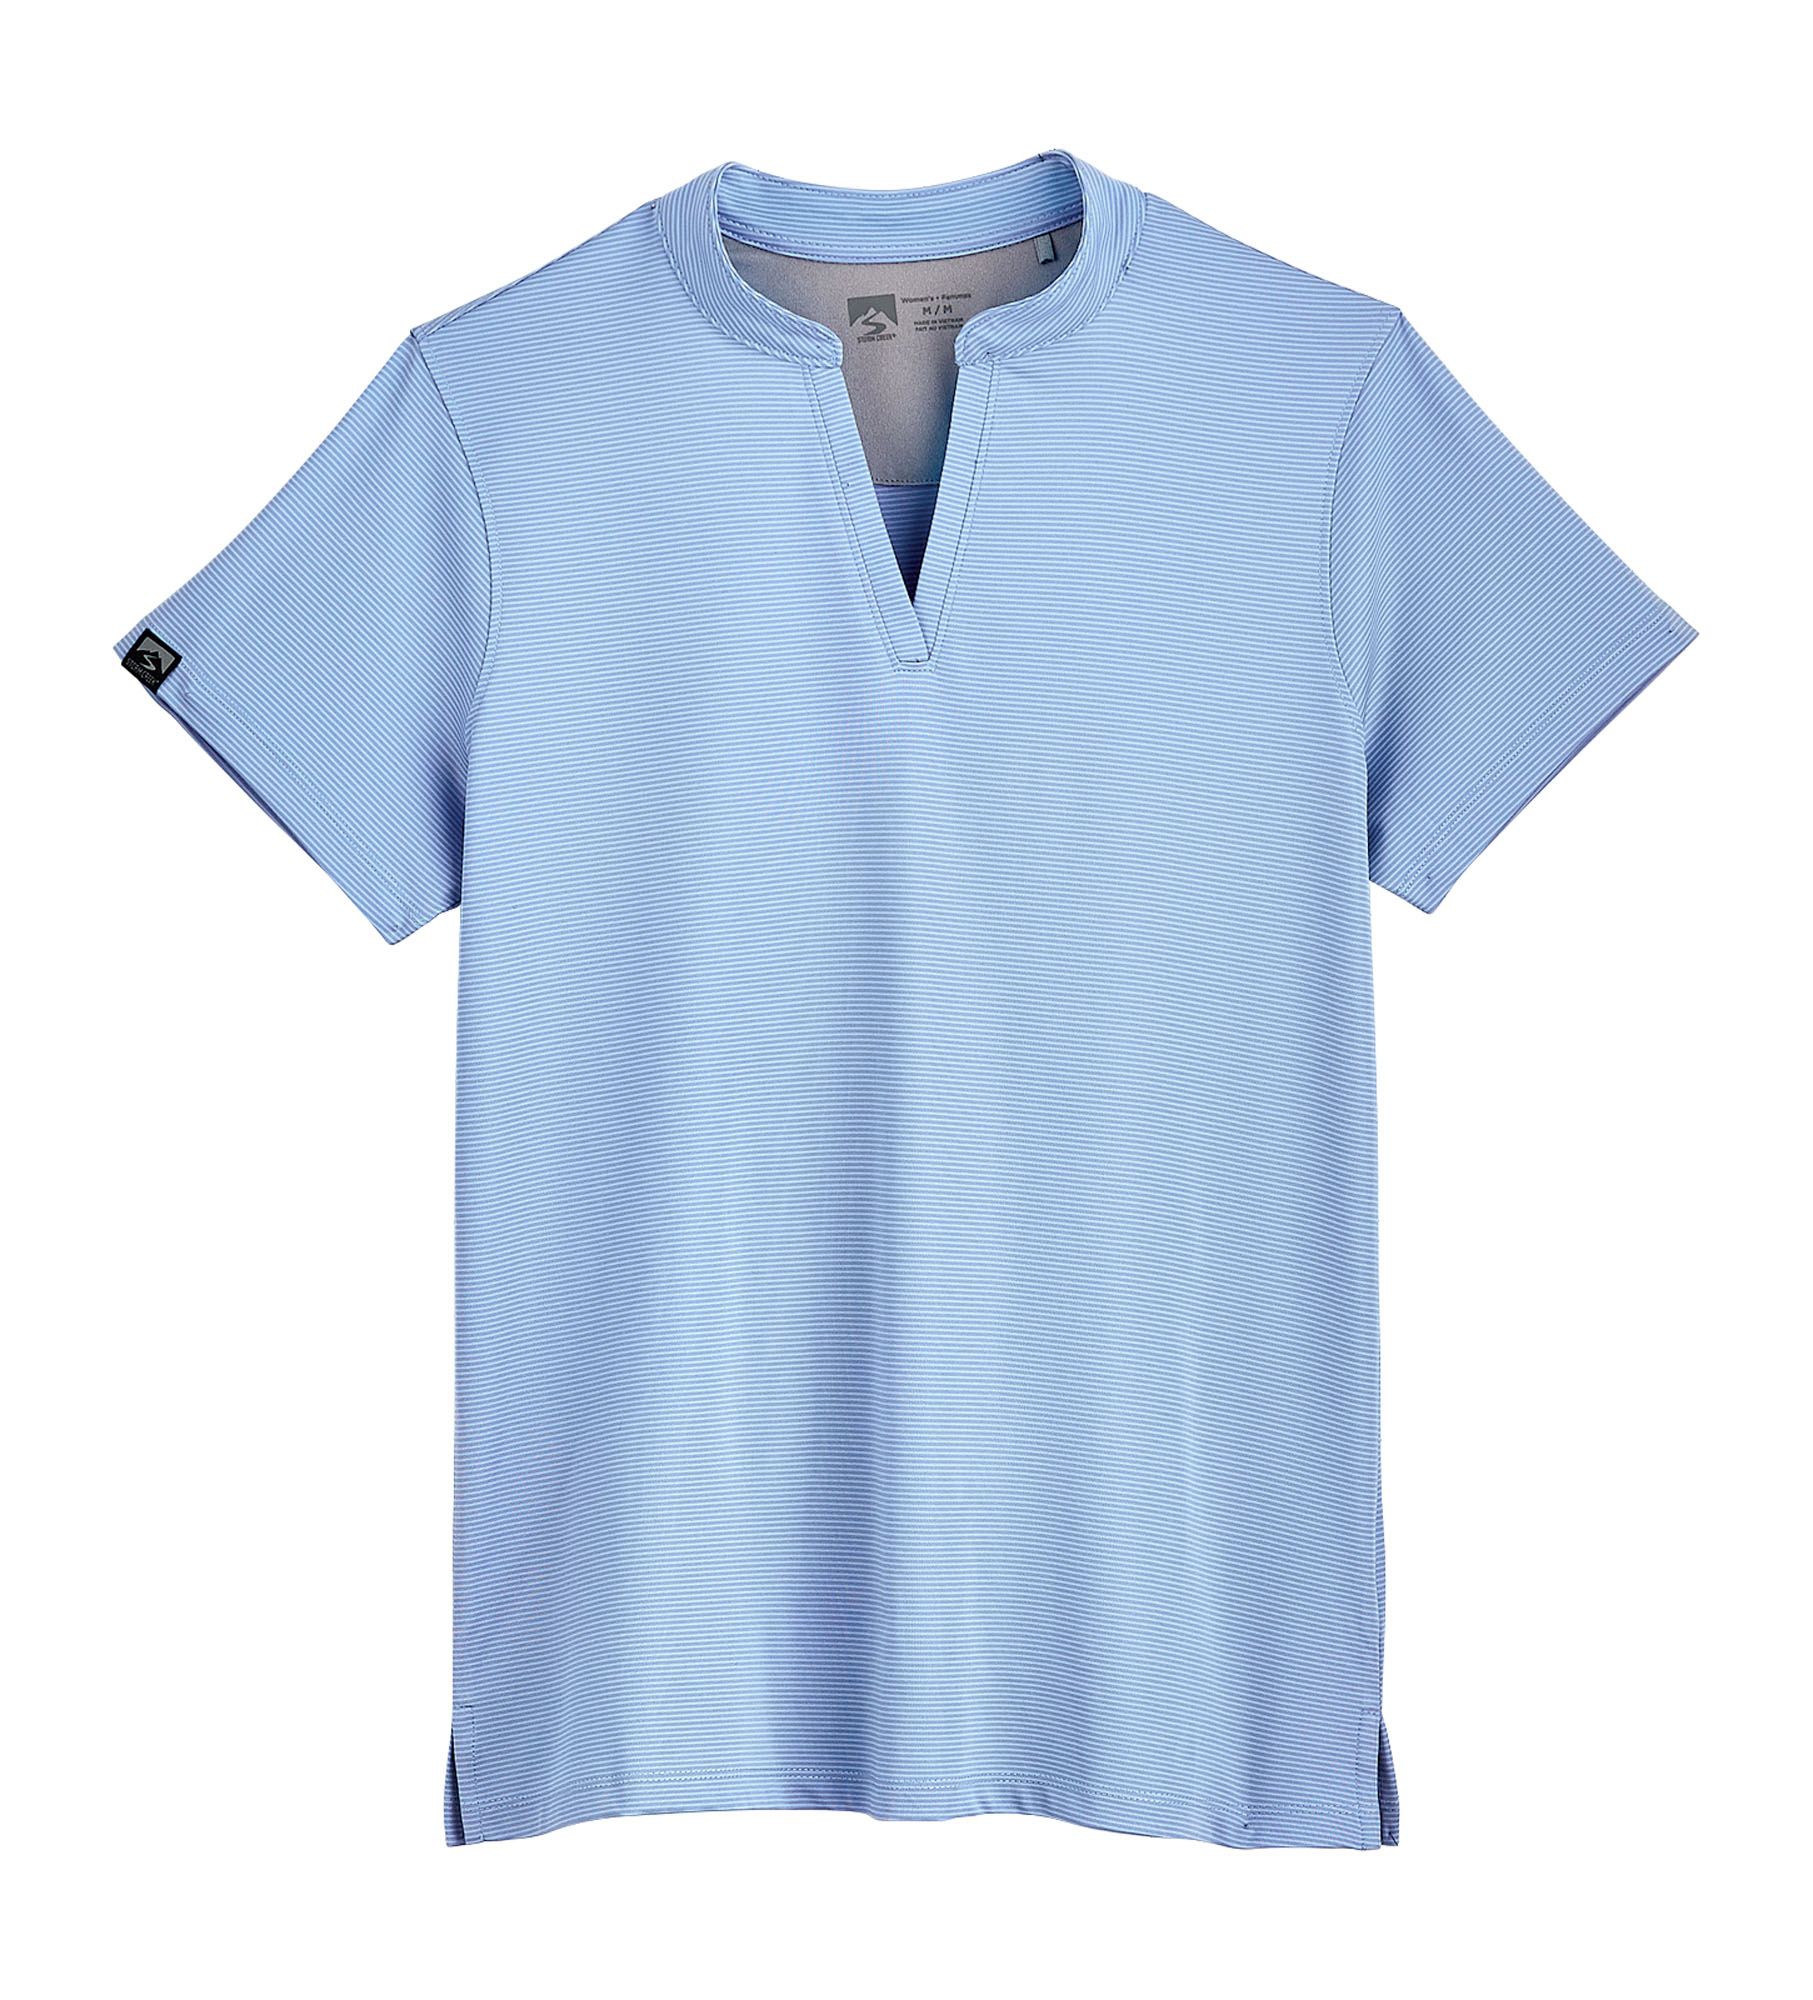 Storm Creek Optimist Short-Sleeve Polo Shirt for Ladies - Peri Blue - S